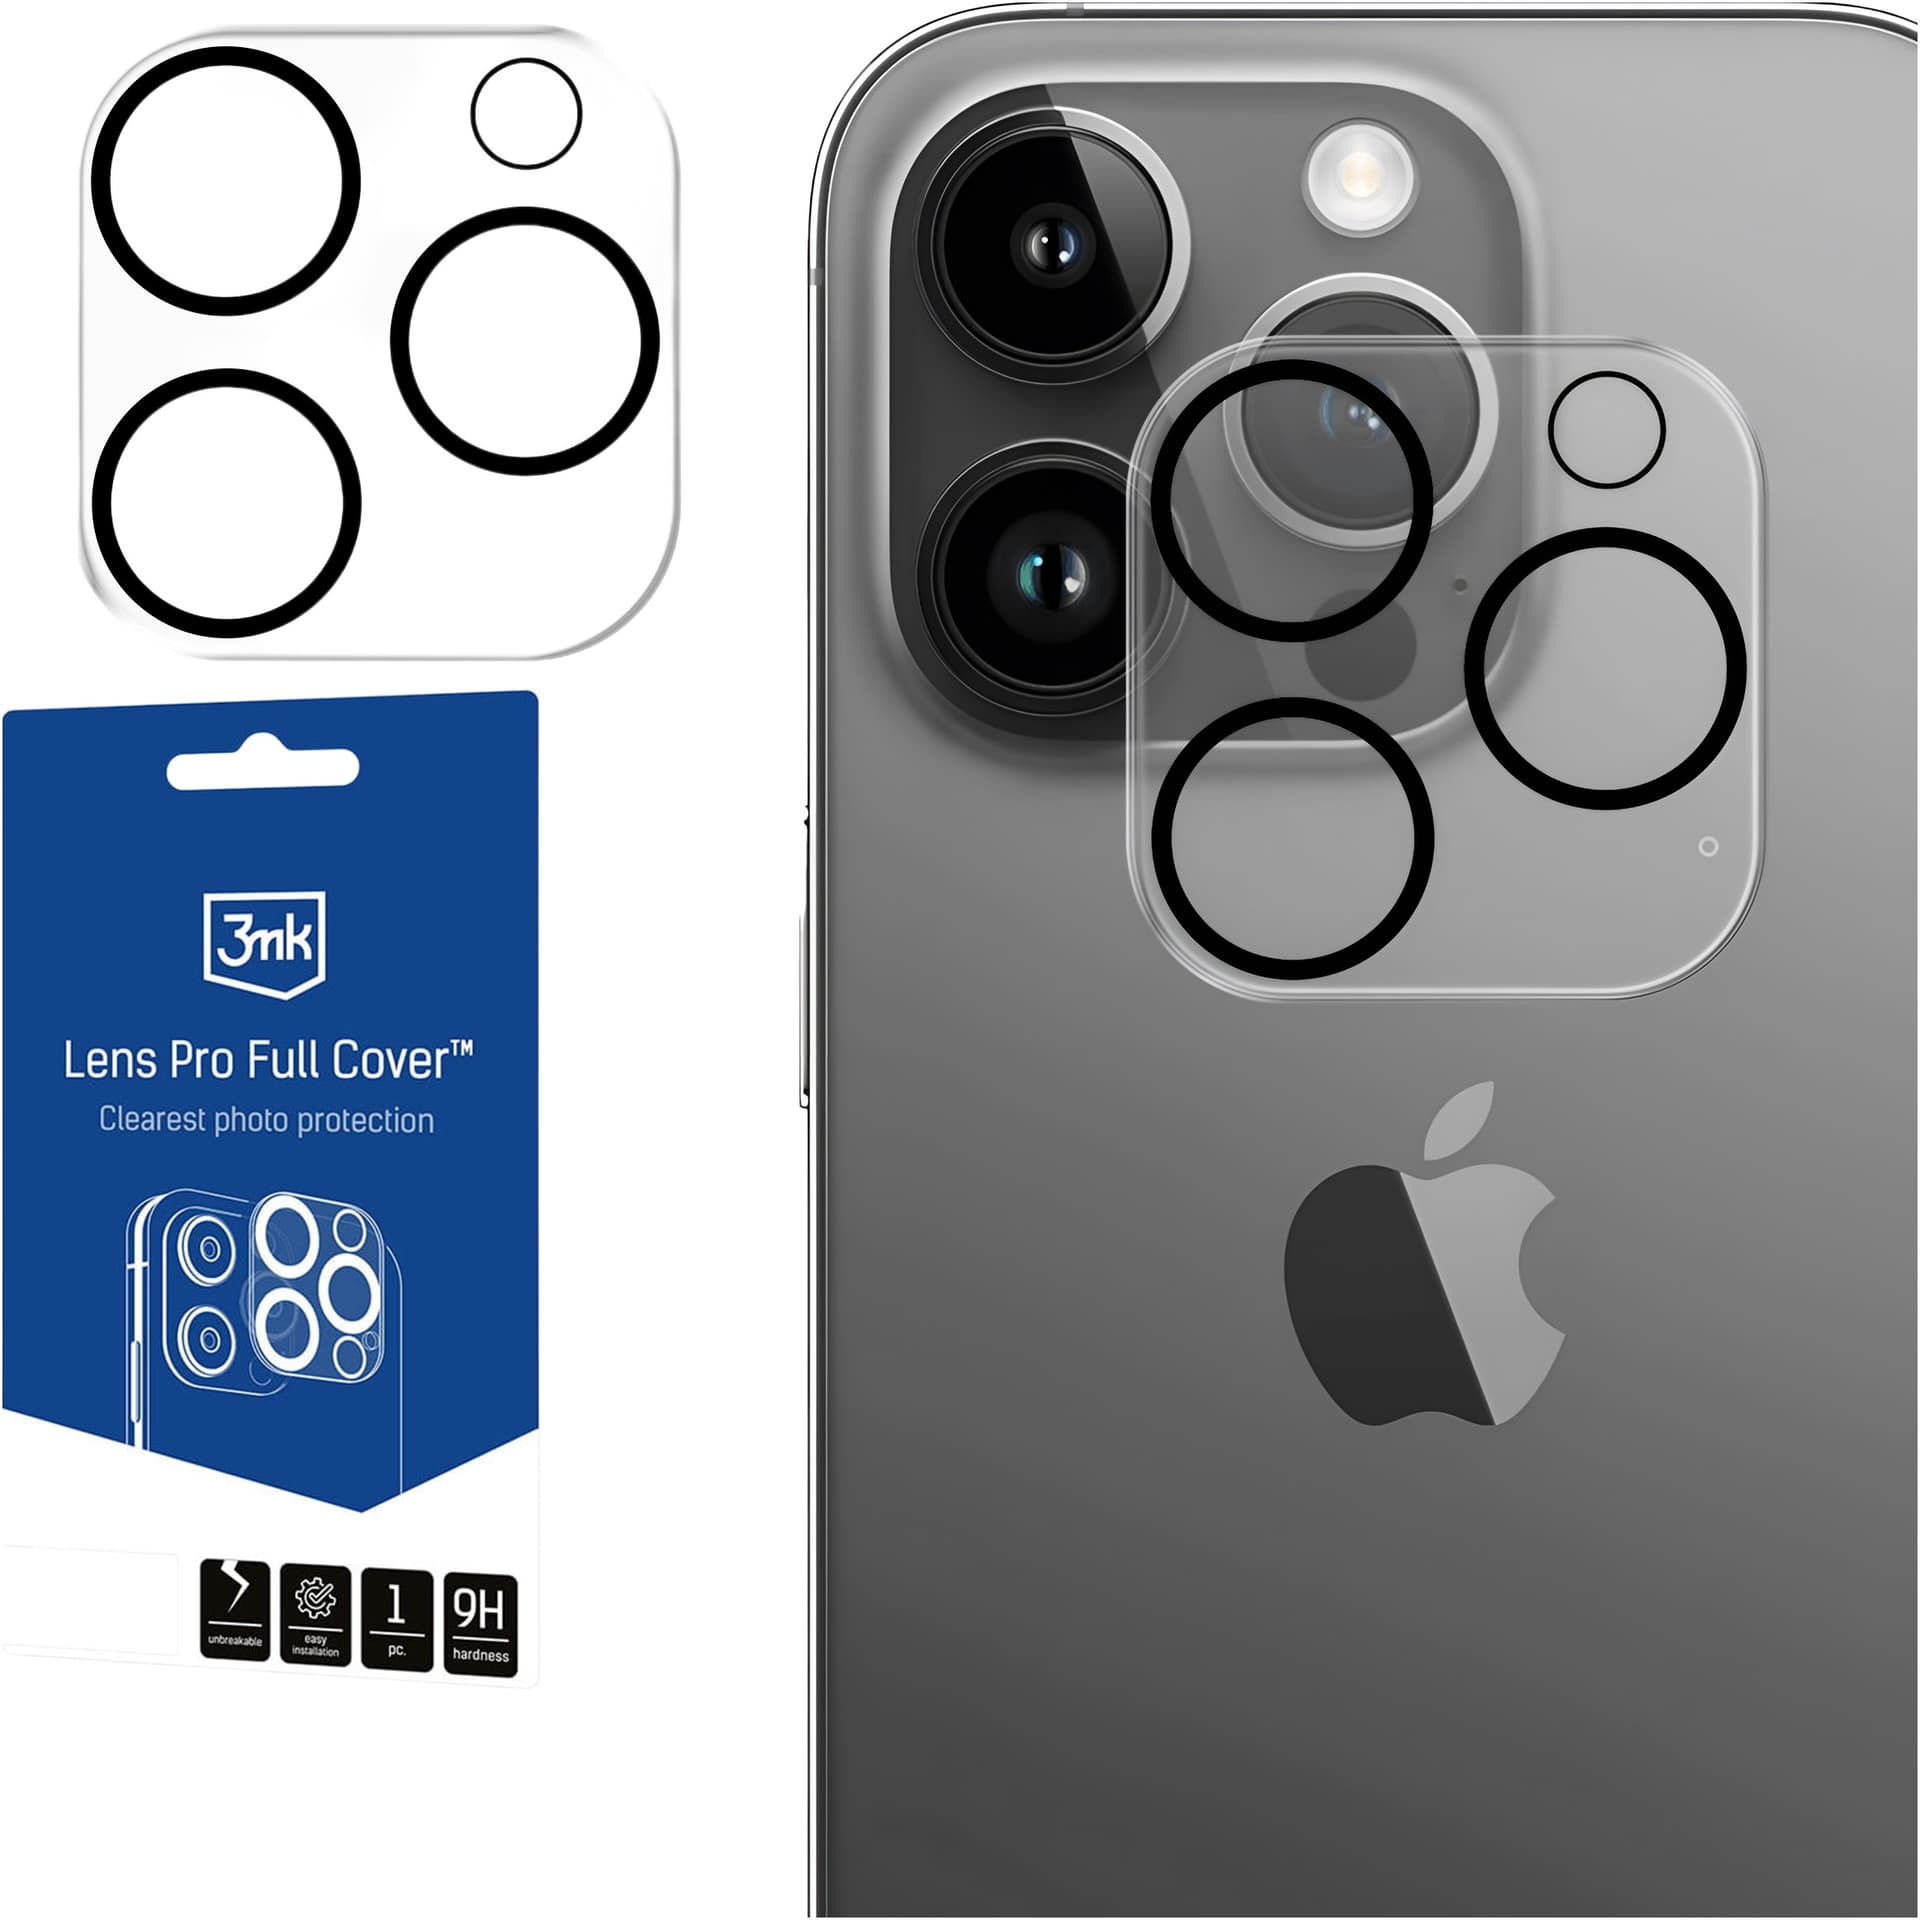 Szkło do iPhone 14 Pro / 14 Pro Max osłona na aparat obiektyw 3mk Lens Pro Full Cover nakładka ochronna